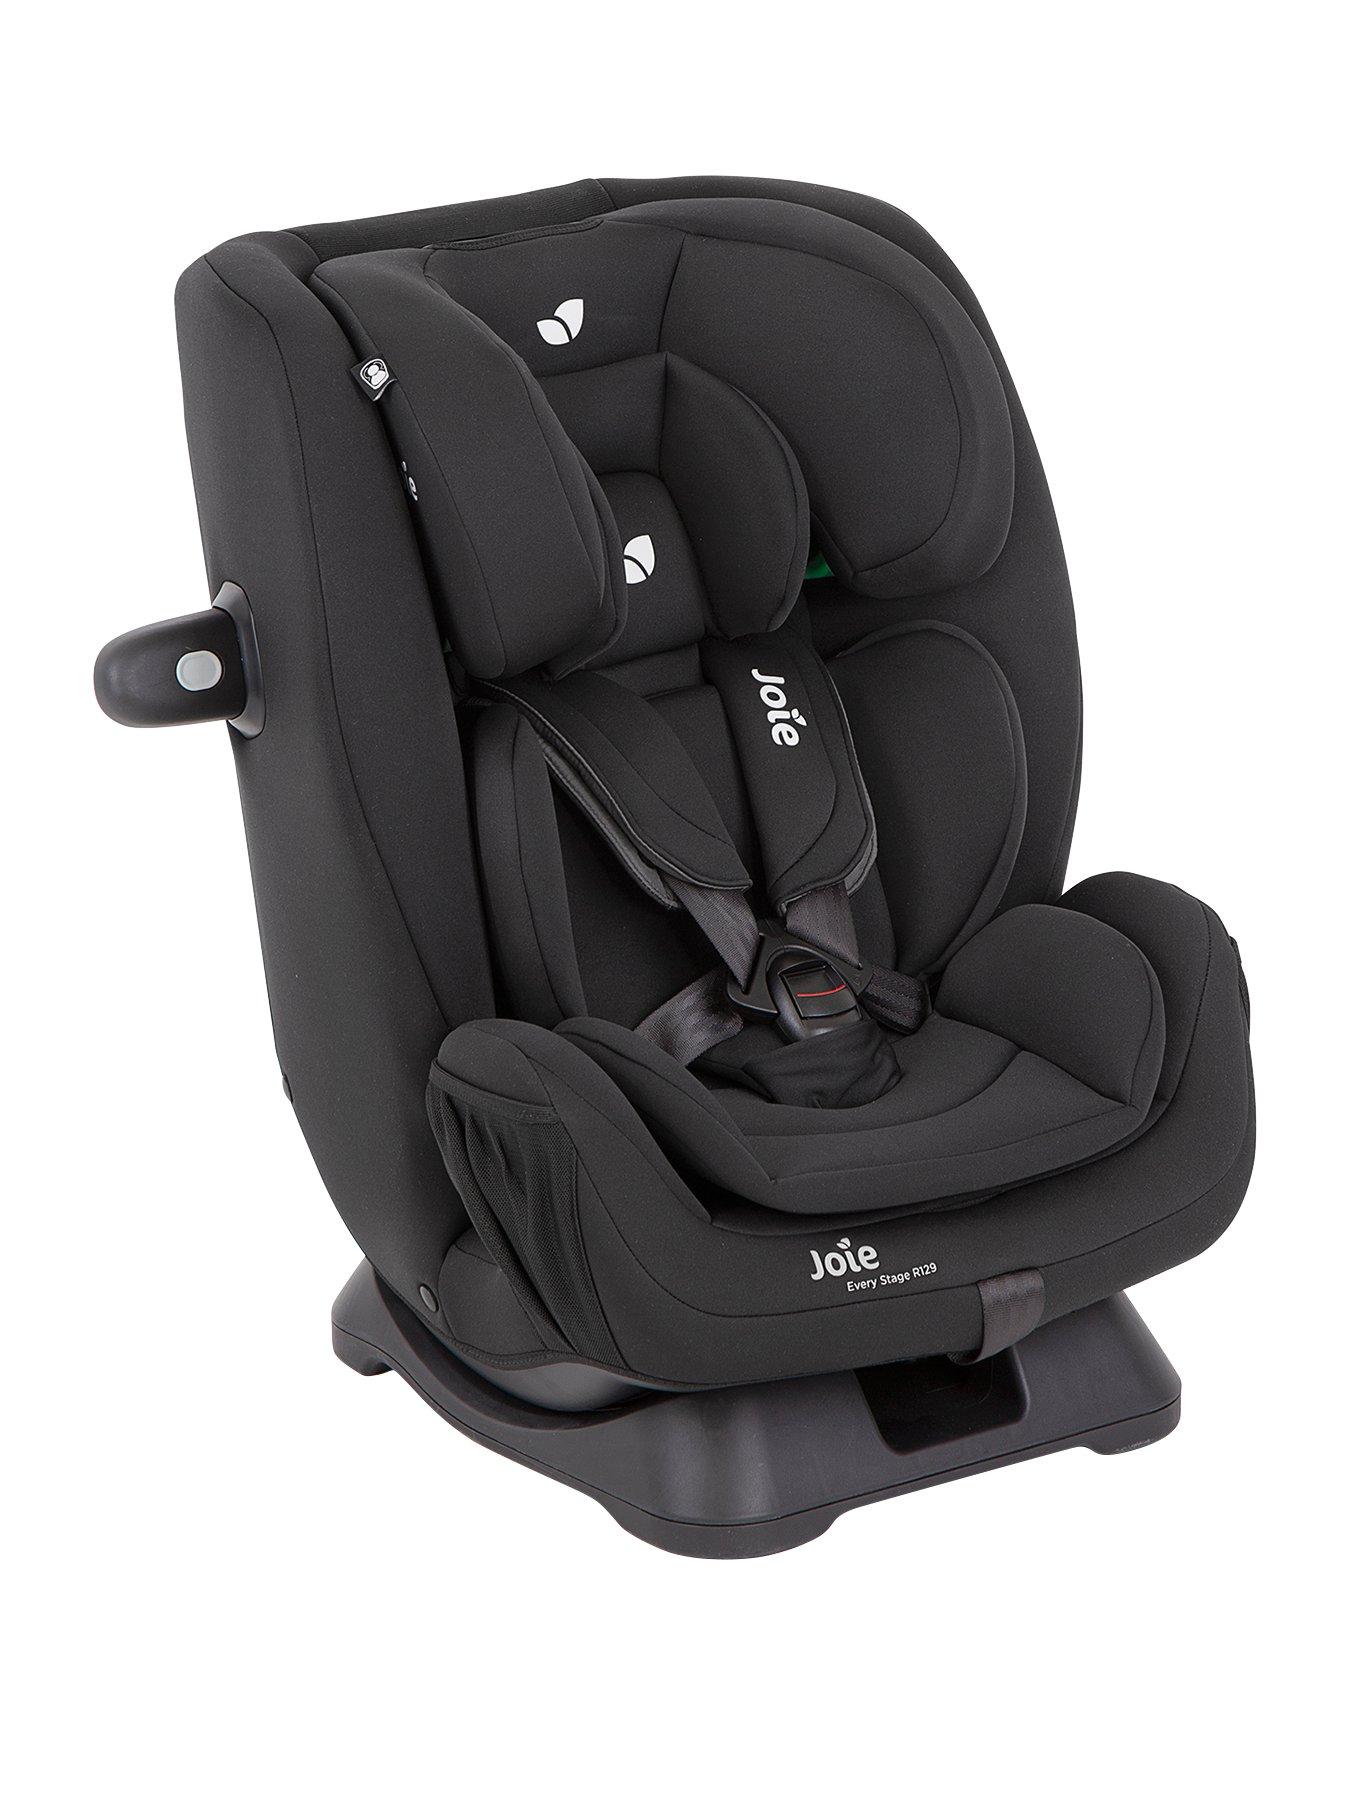 Car Seats for Children & Babies, Baby Car Seats